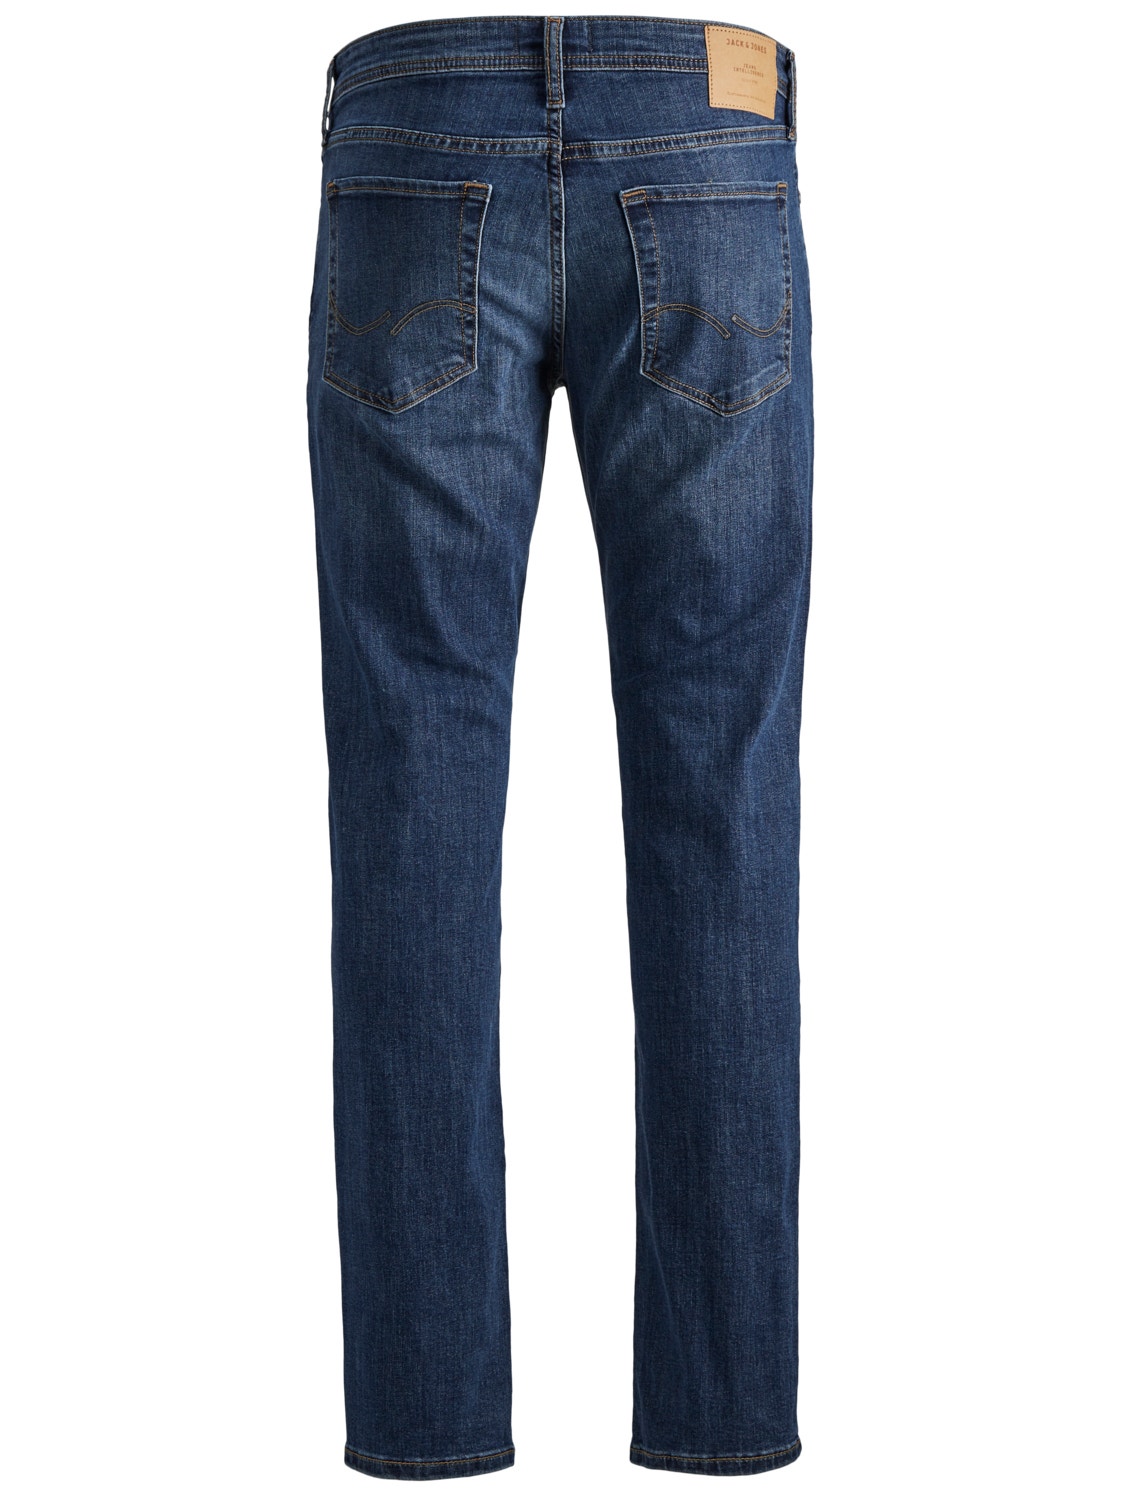 Blue Tapered Jack JJORIGINAL NOOS Medium jeans & 814 | JJIMIKE AM fit | Jones®